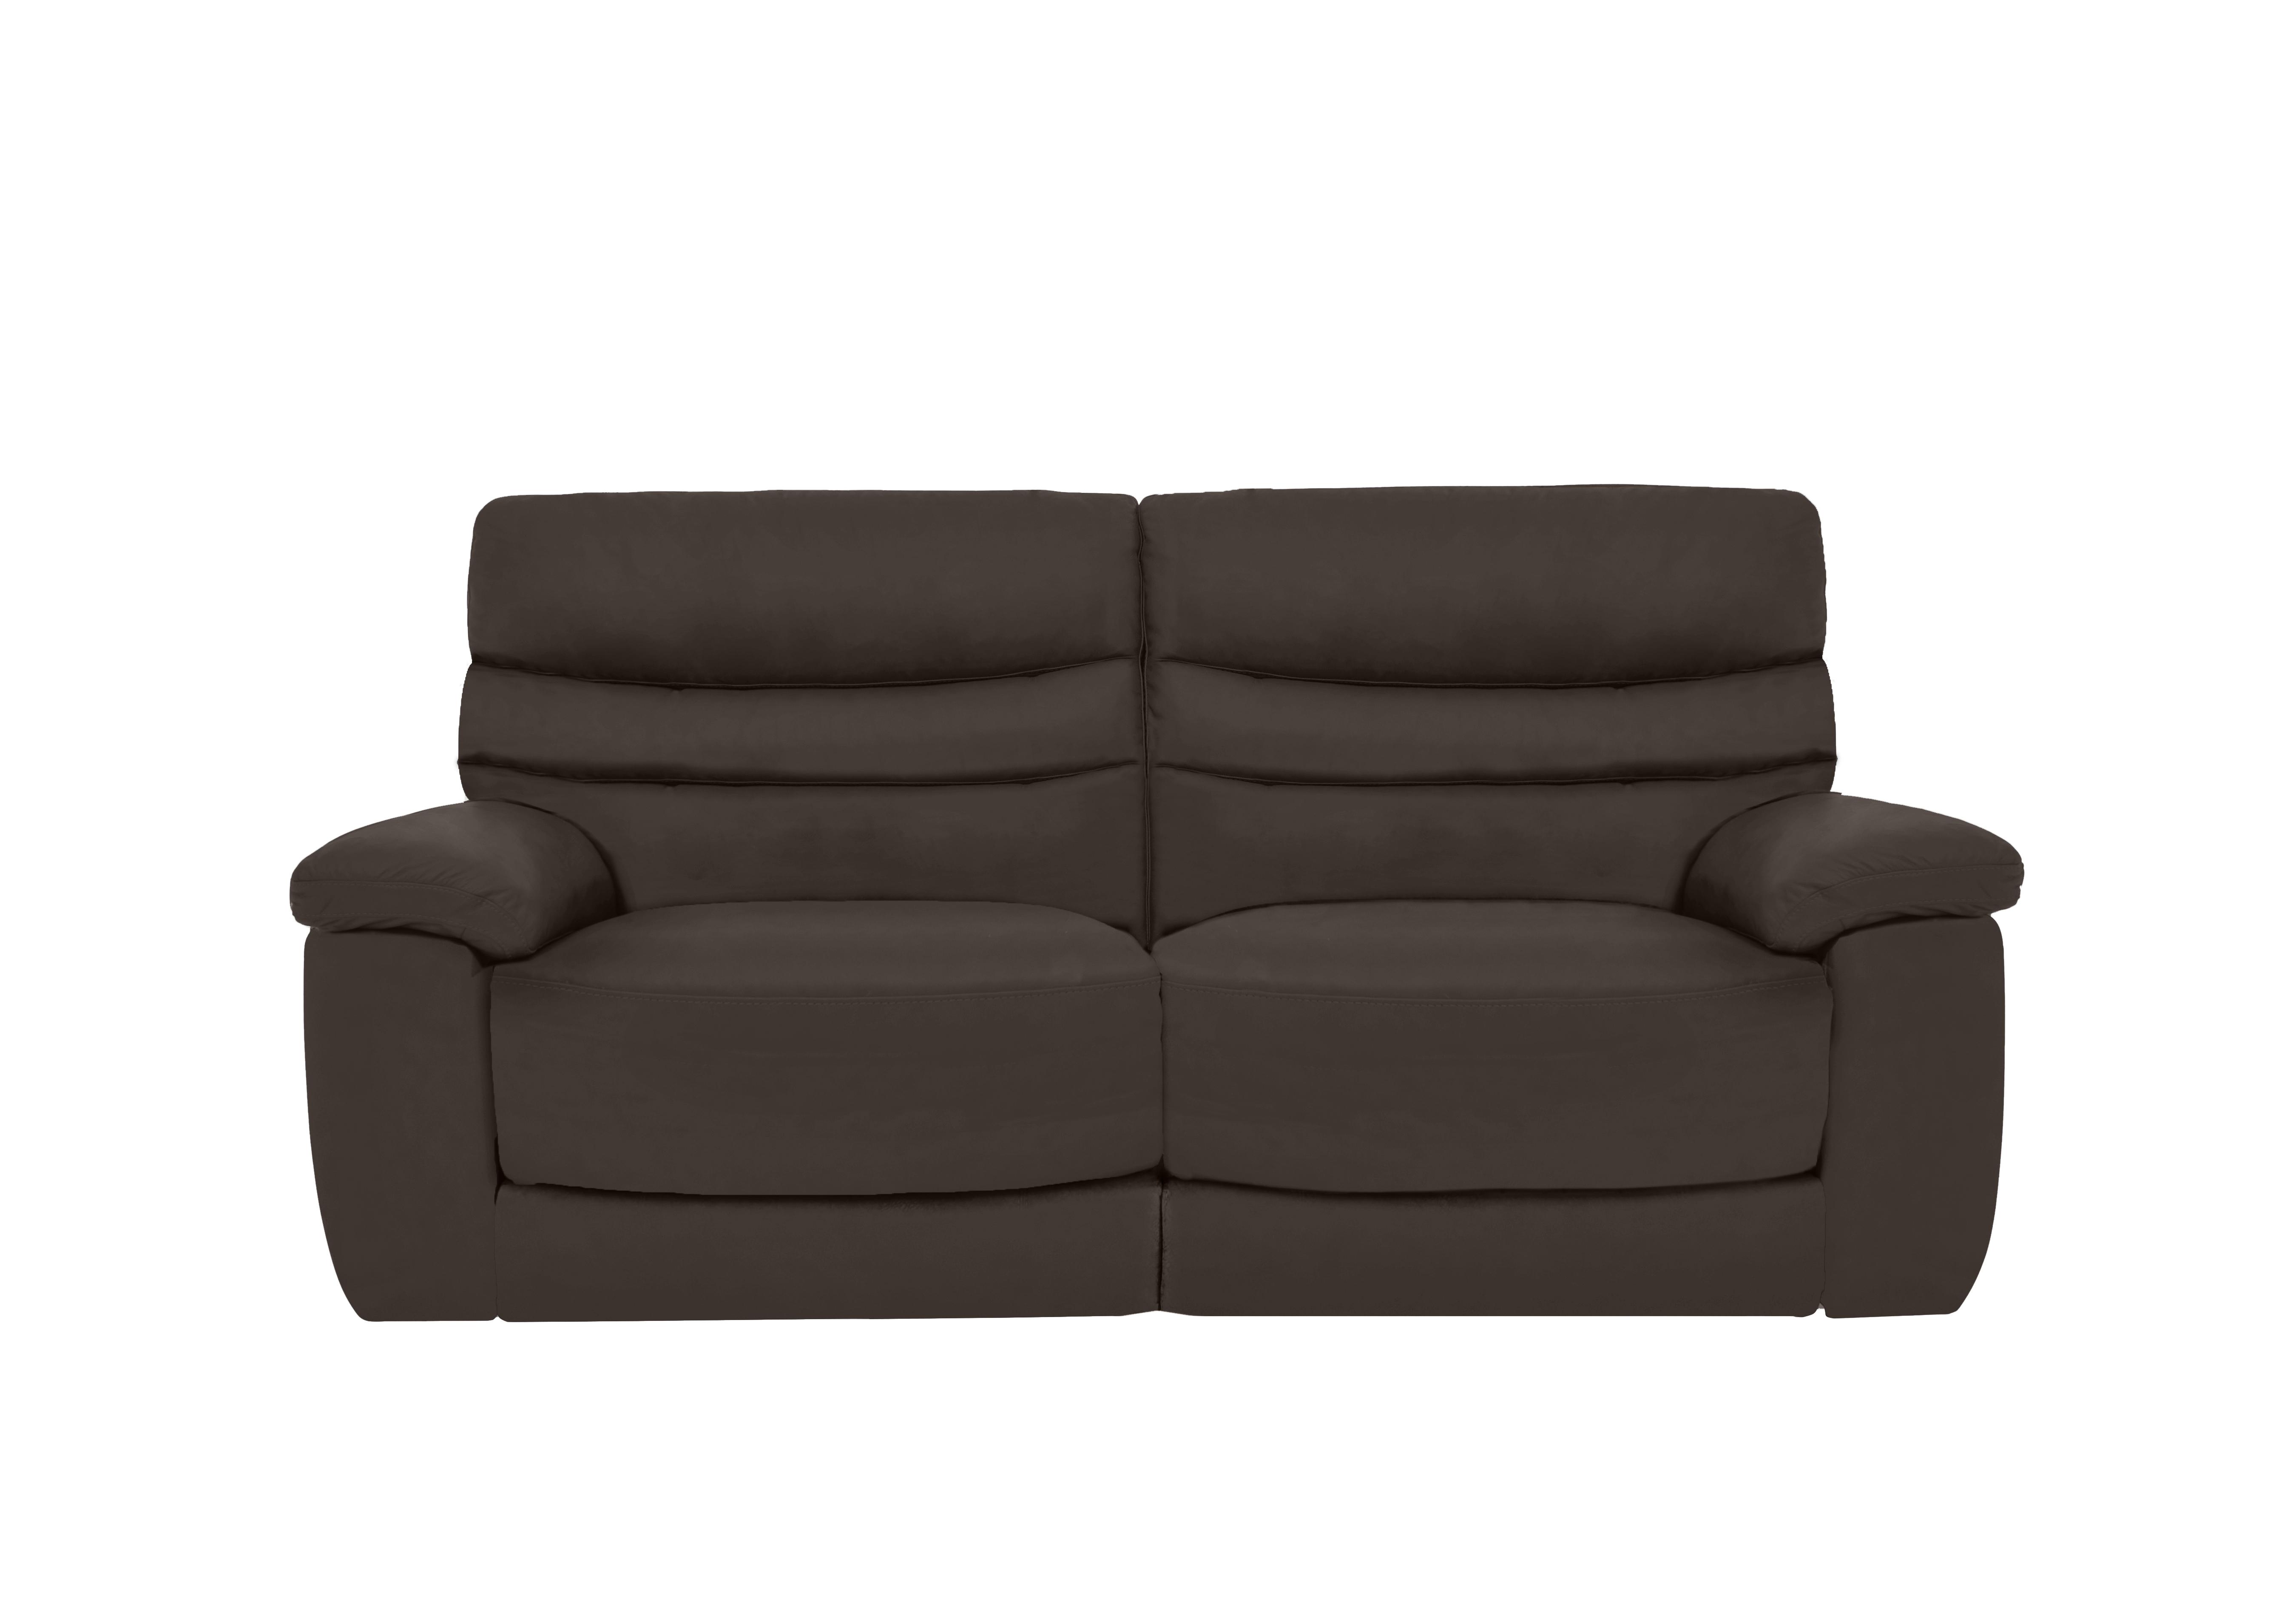 Nimbus 3 Seater Leather Sofa in Bx-037c Walnut on Furniture Village